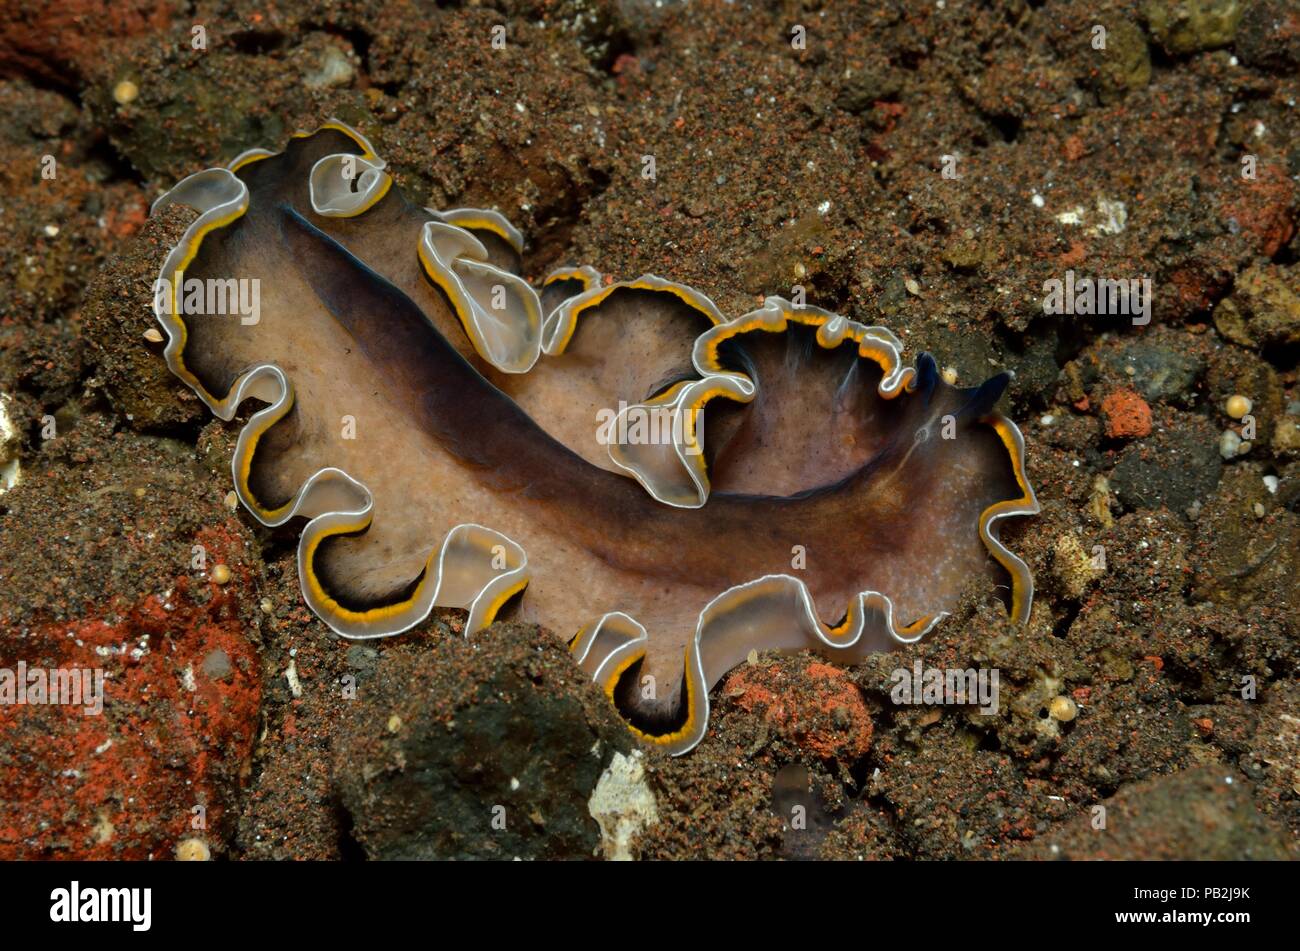 Flatworm marini, Plattwurm, Pseudobiceros uniarborensis, Tulamben, Bali Foto Stock